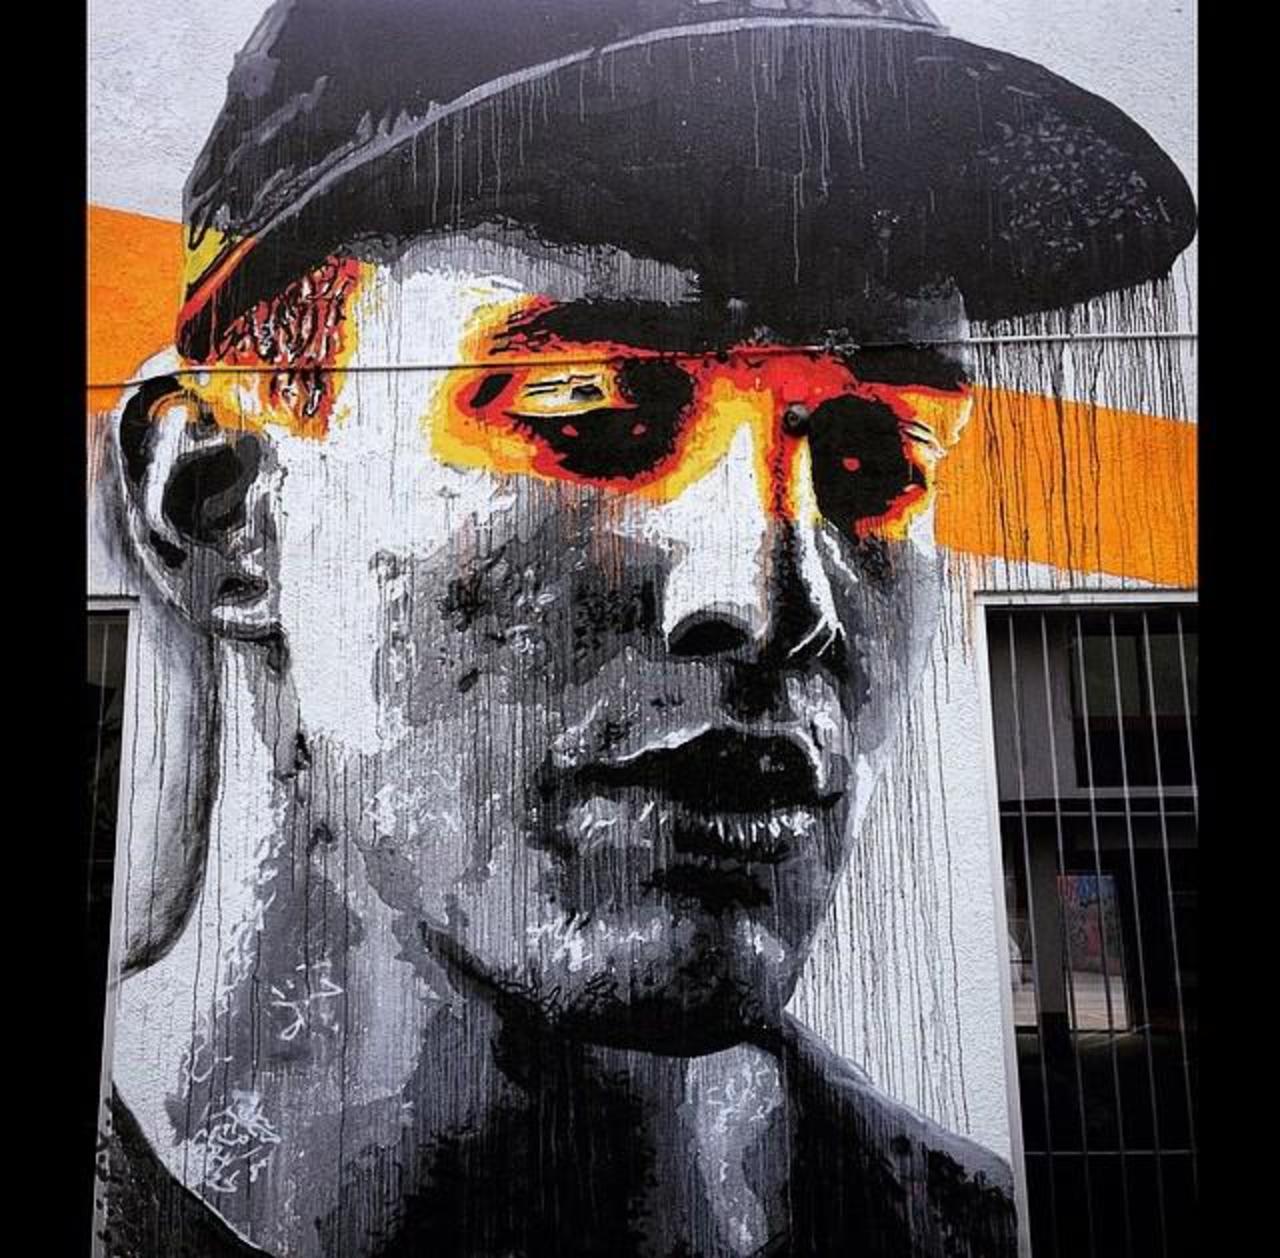 Artist Nils Westergard Street Art portrait in Miami 

#art #graffiti #mural #streetart http://t.co/EjEzenJhwu